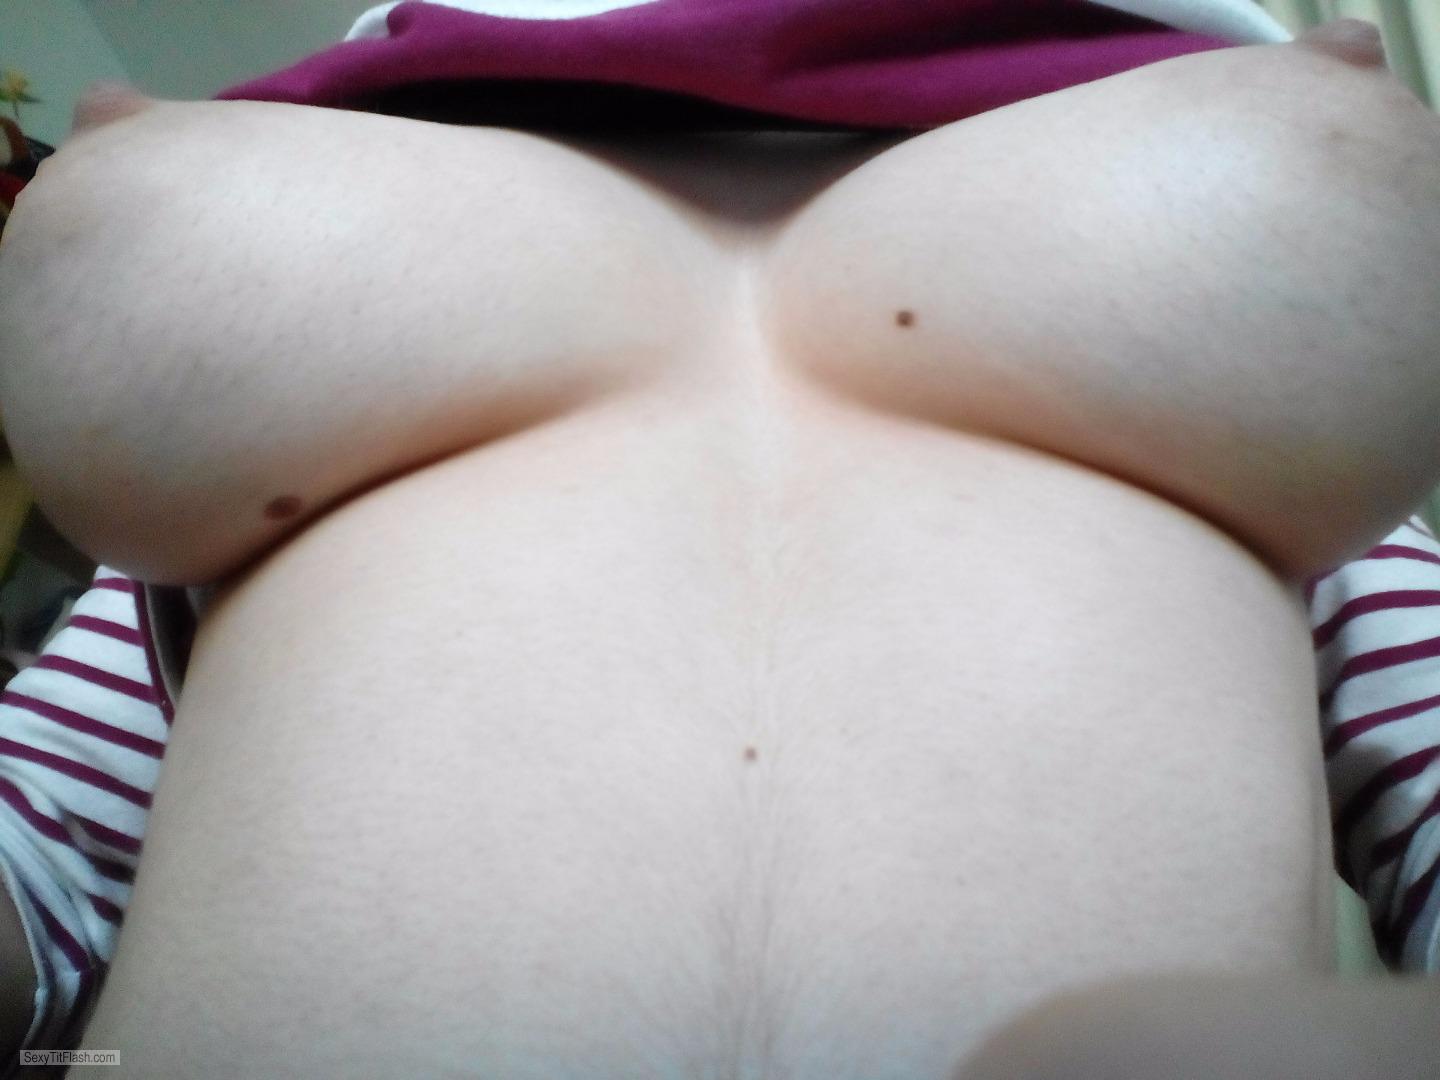 Tit Flash: My Big Tits (Selfie) - Hotsammy from United Kingdom